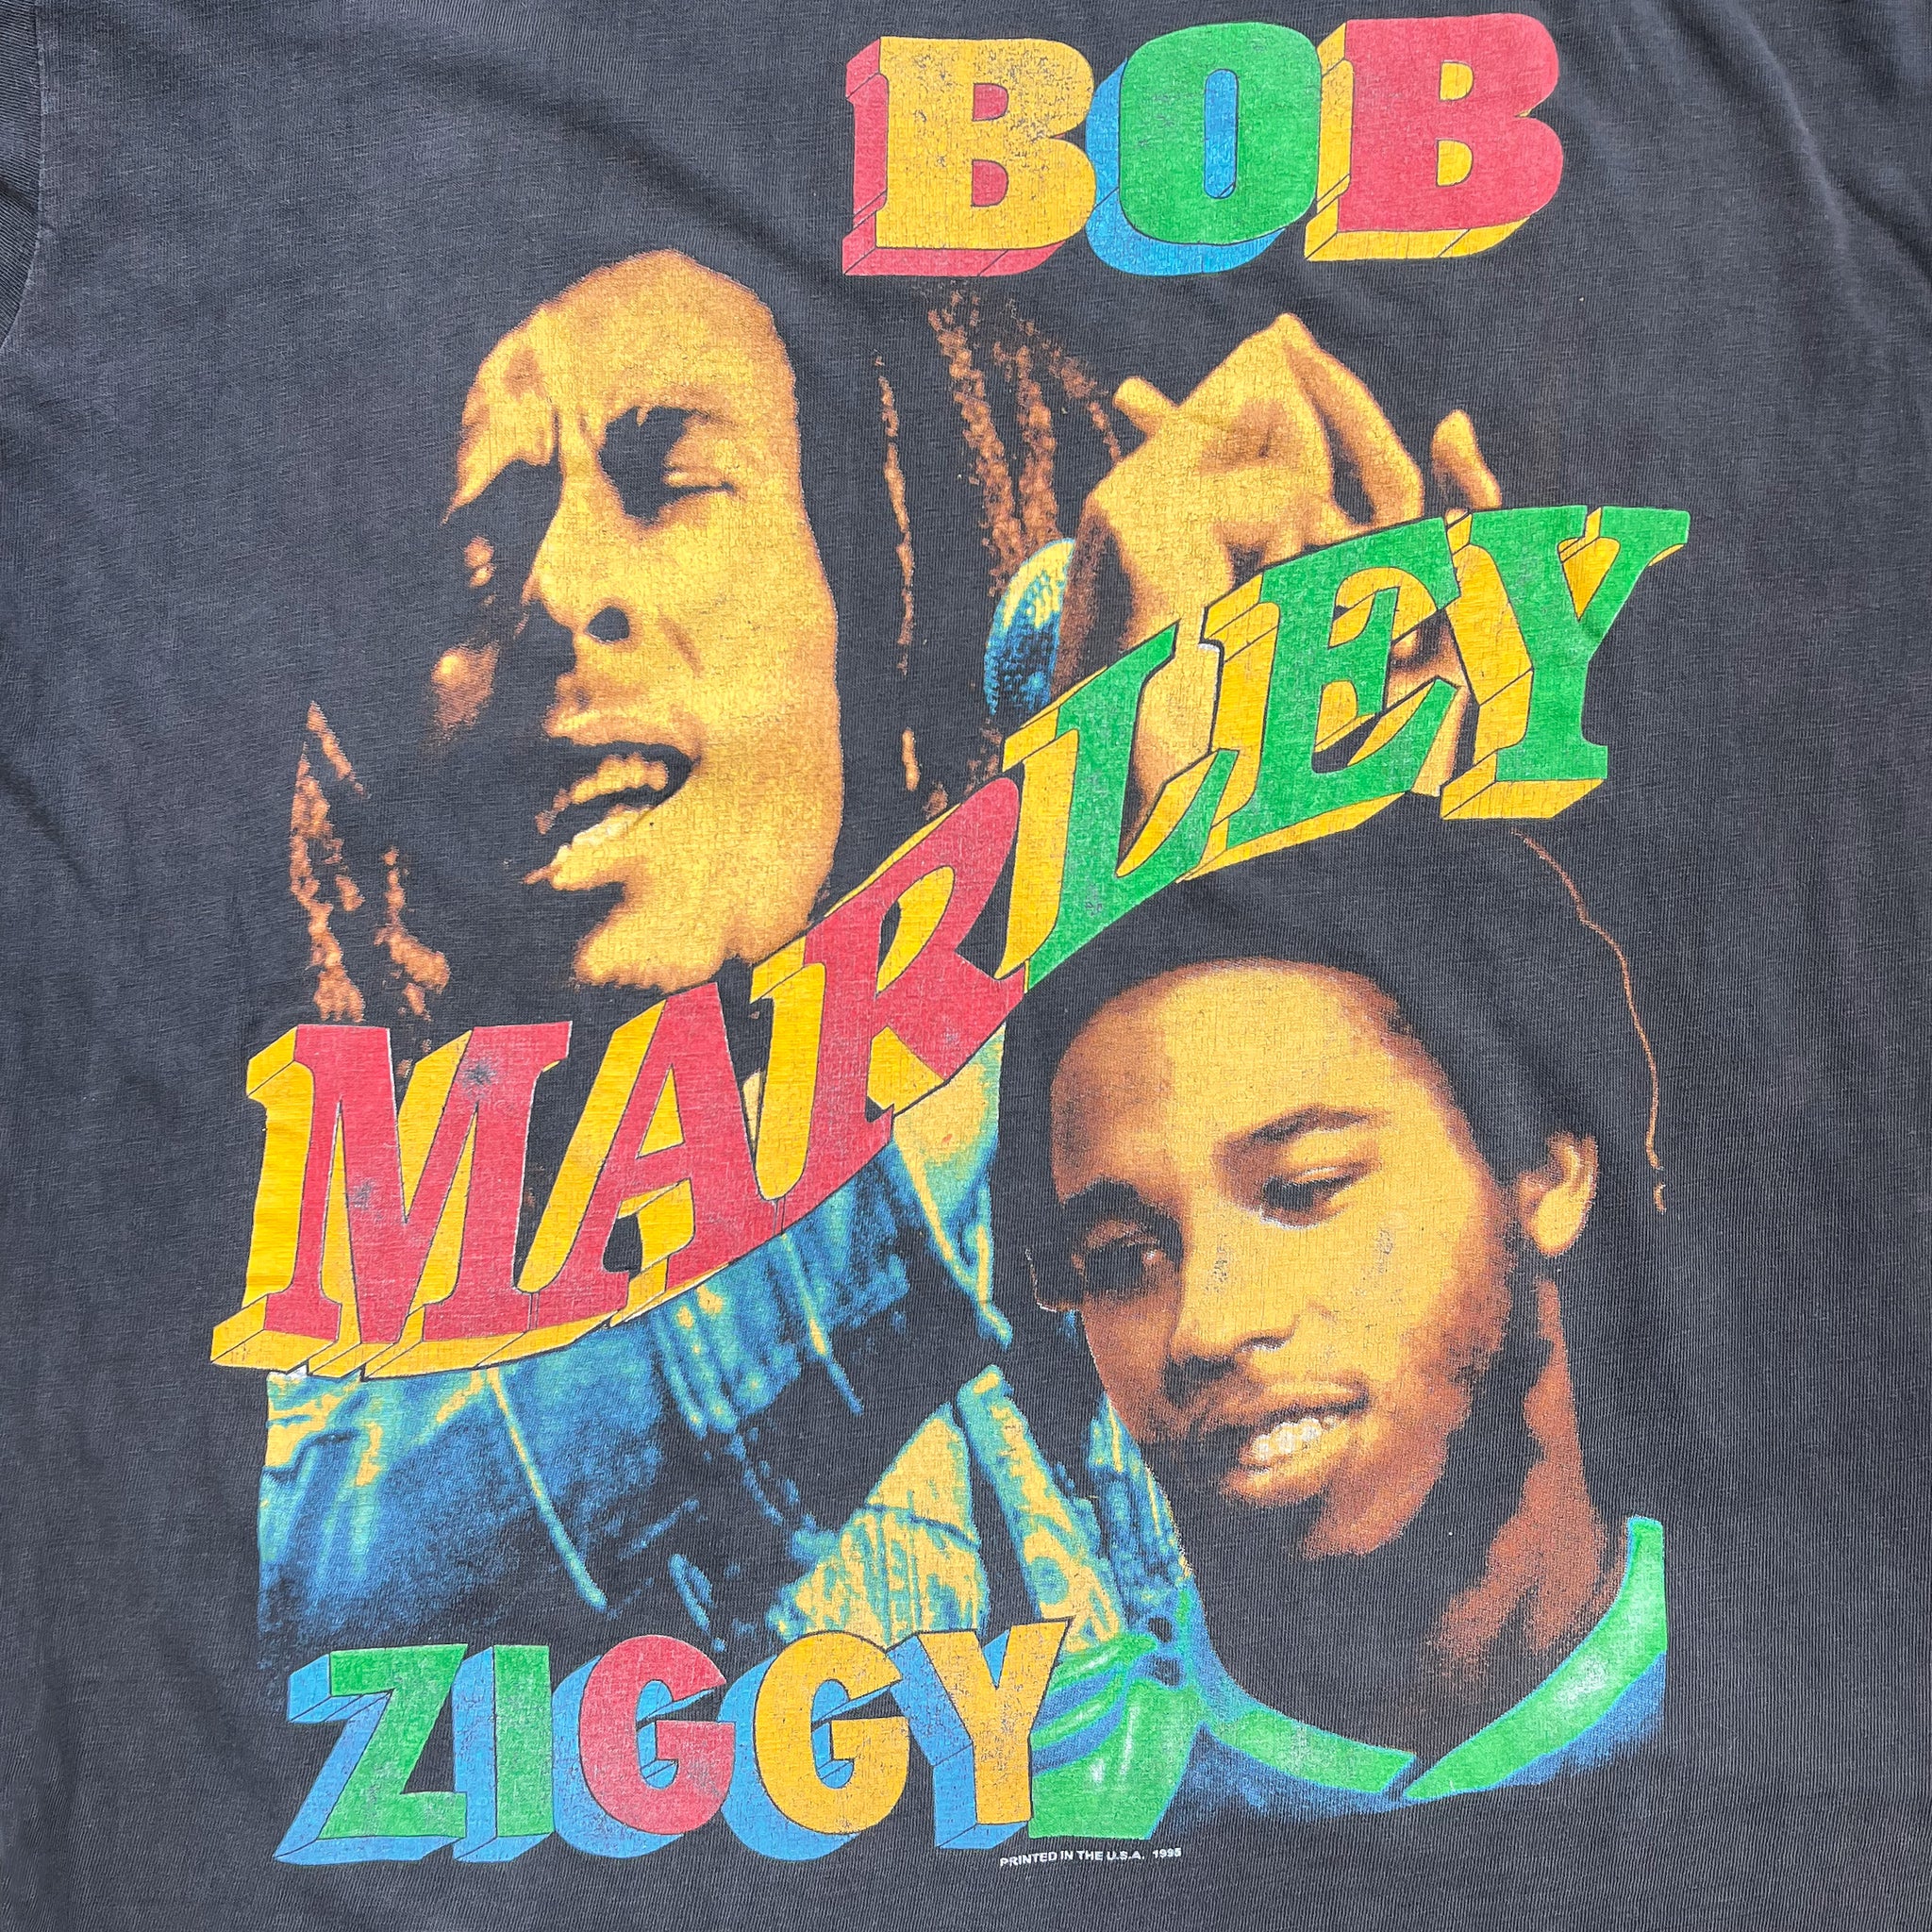 Bob and Ziggy Marley Vintage Bootleg Rap Tee